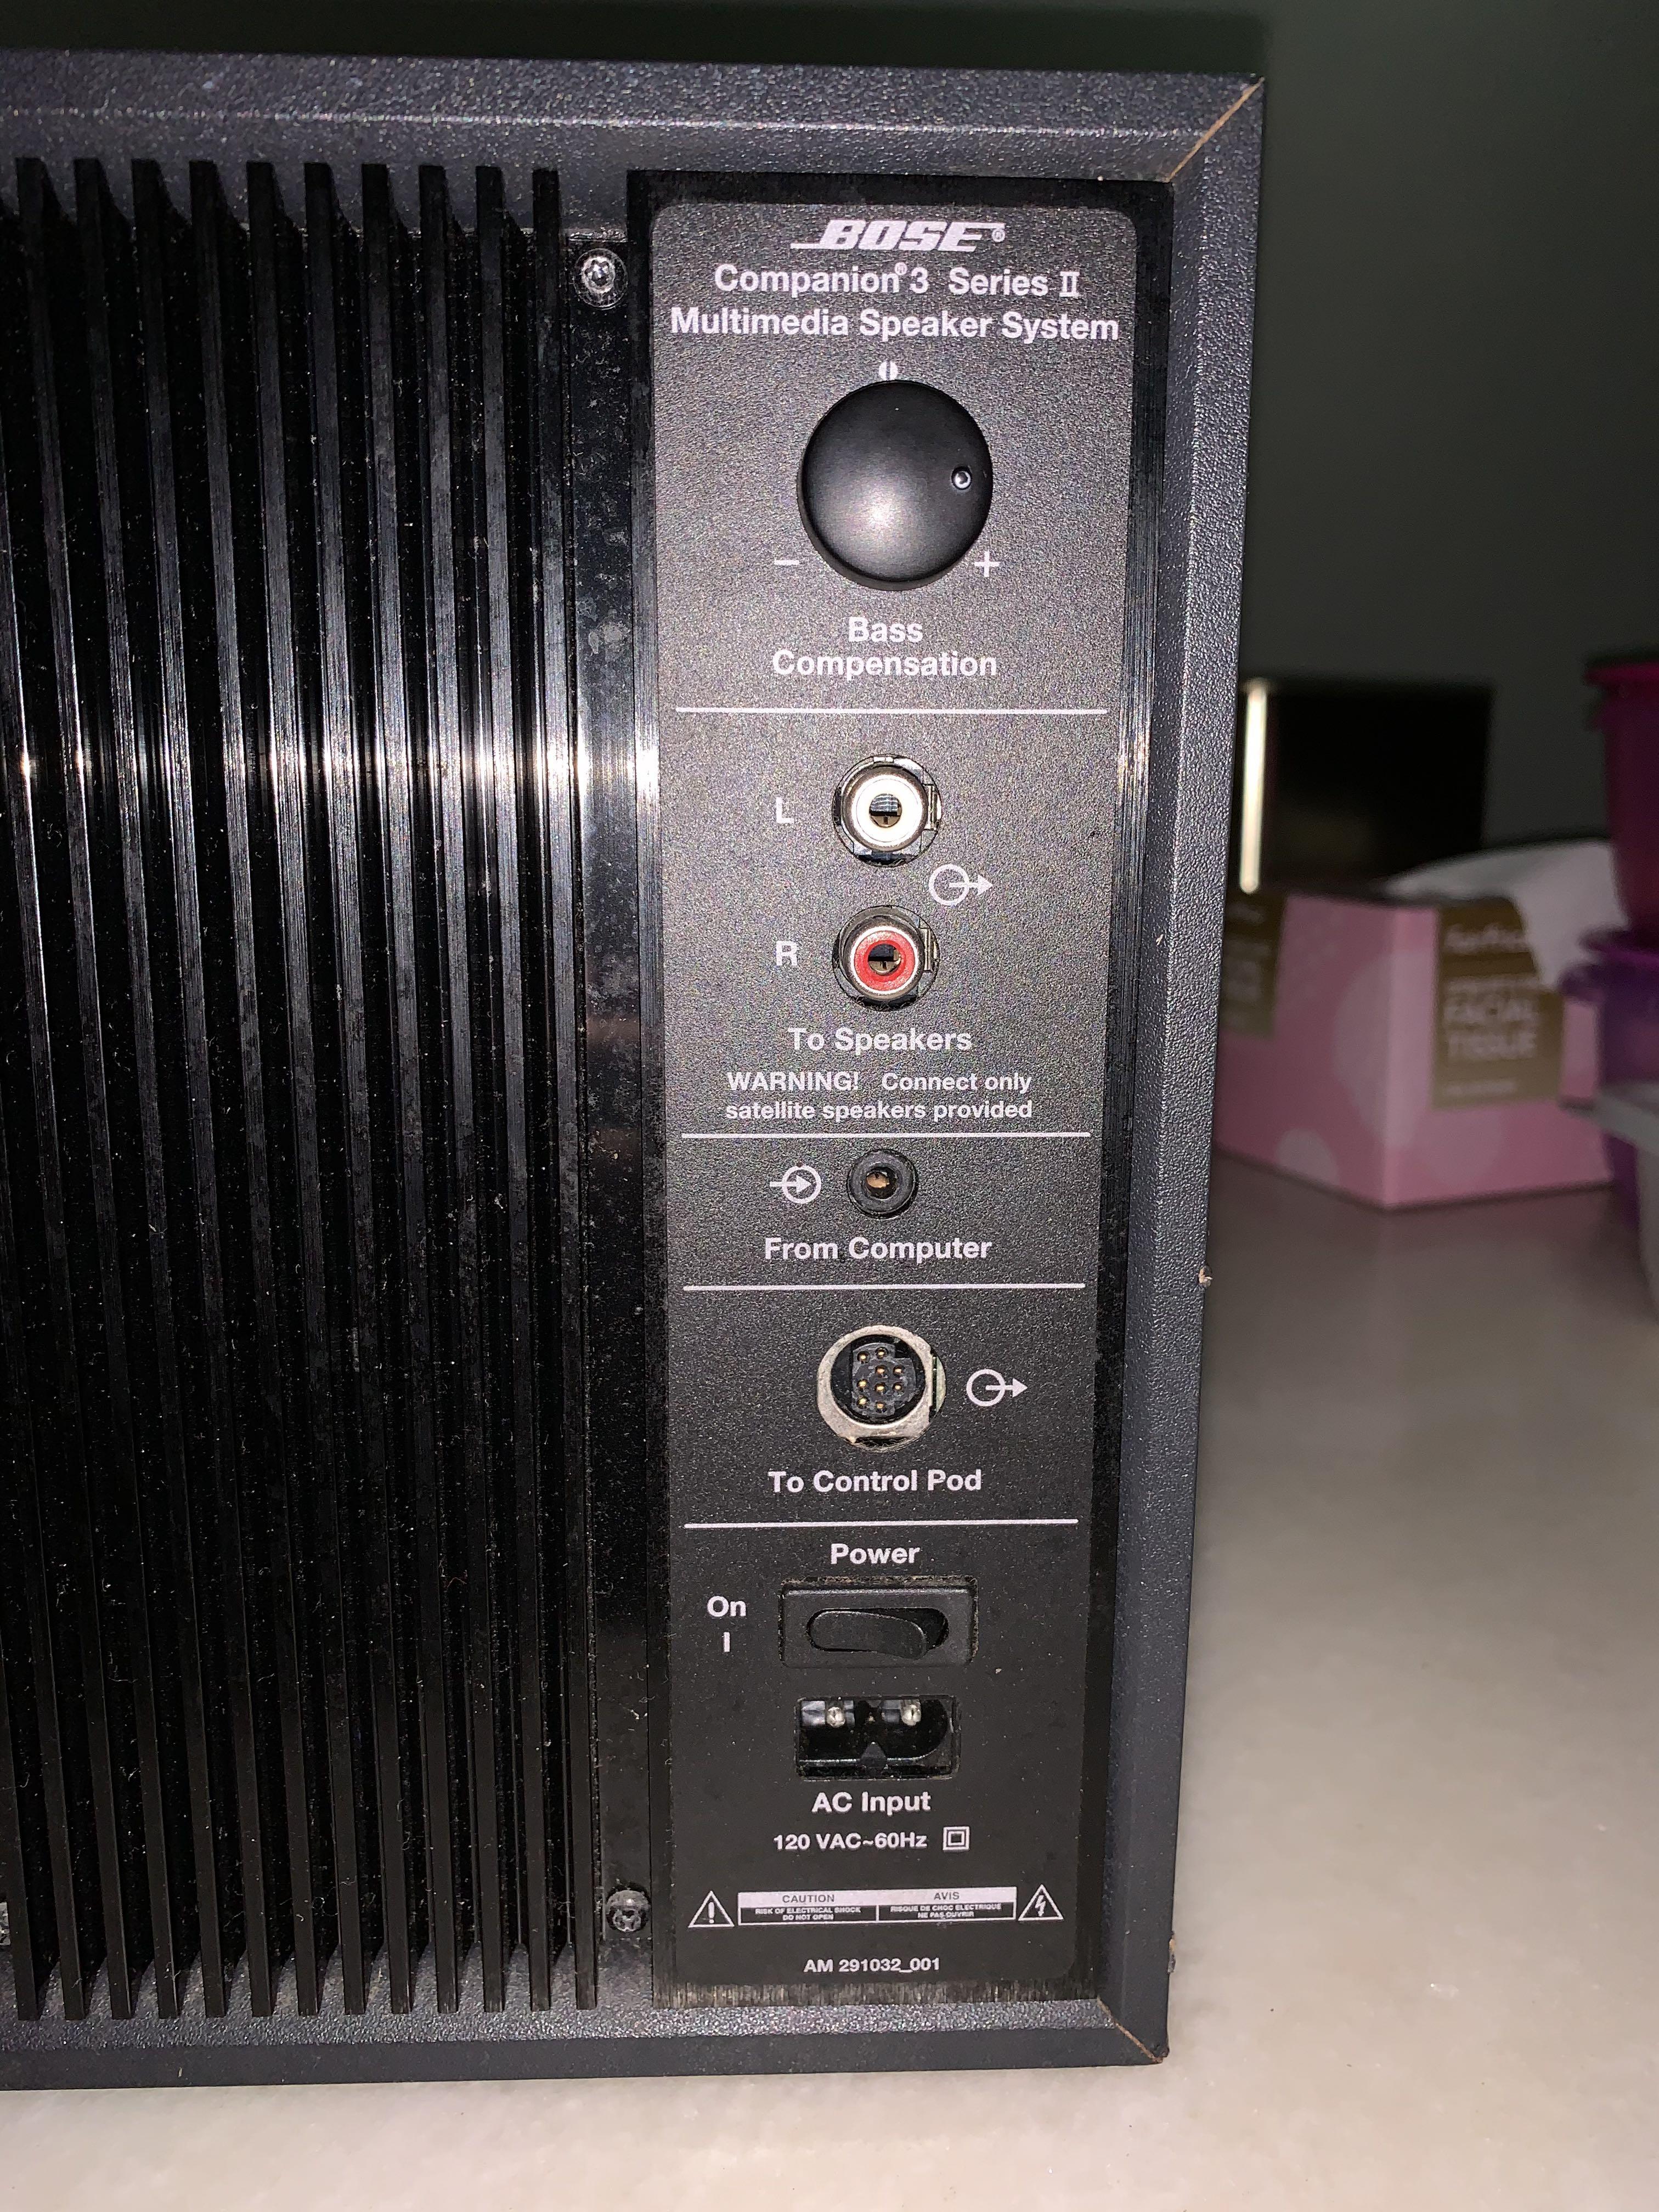 Bose Companion 3 Series II Multimedia Speaker System - Electronics